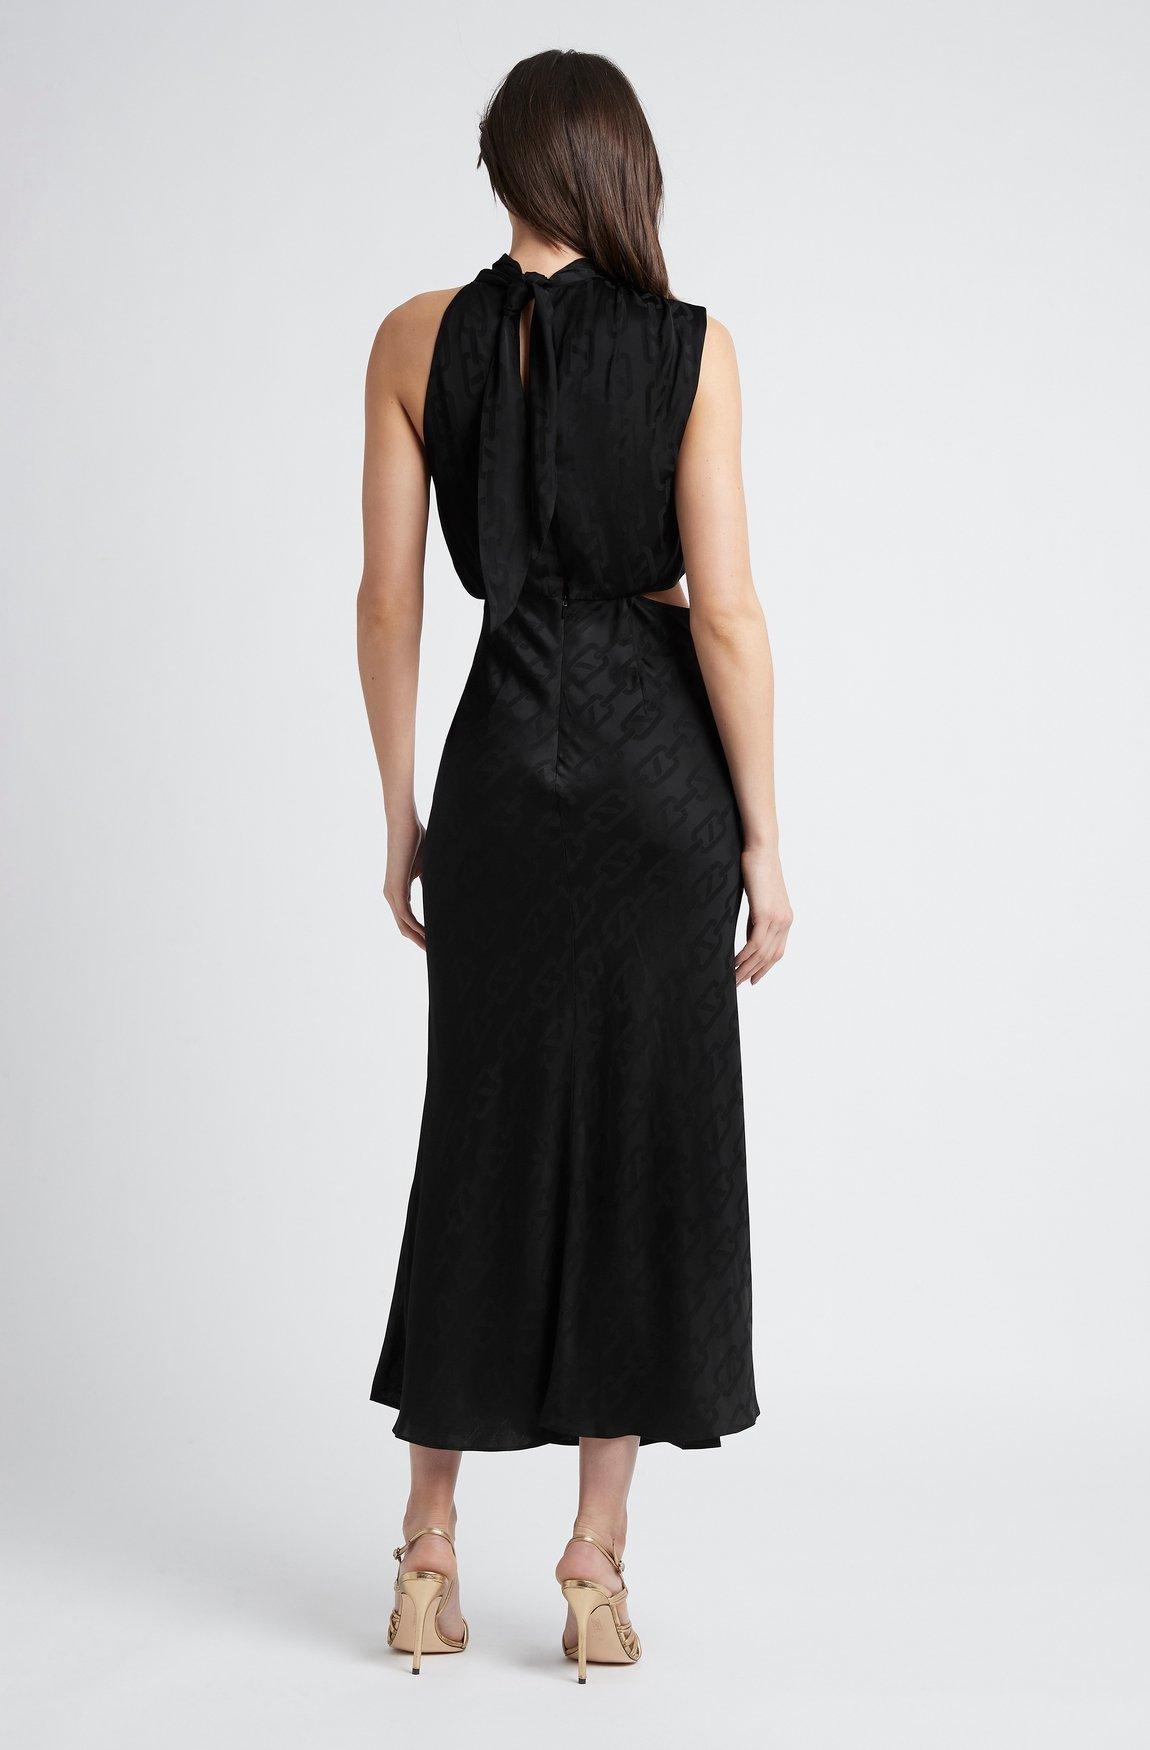 Sheike Reflections Dress Black Size 8